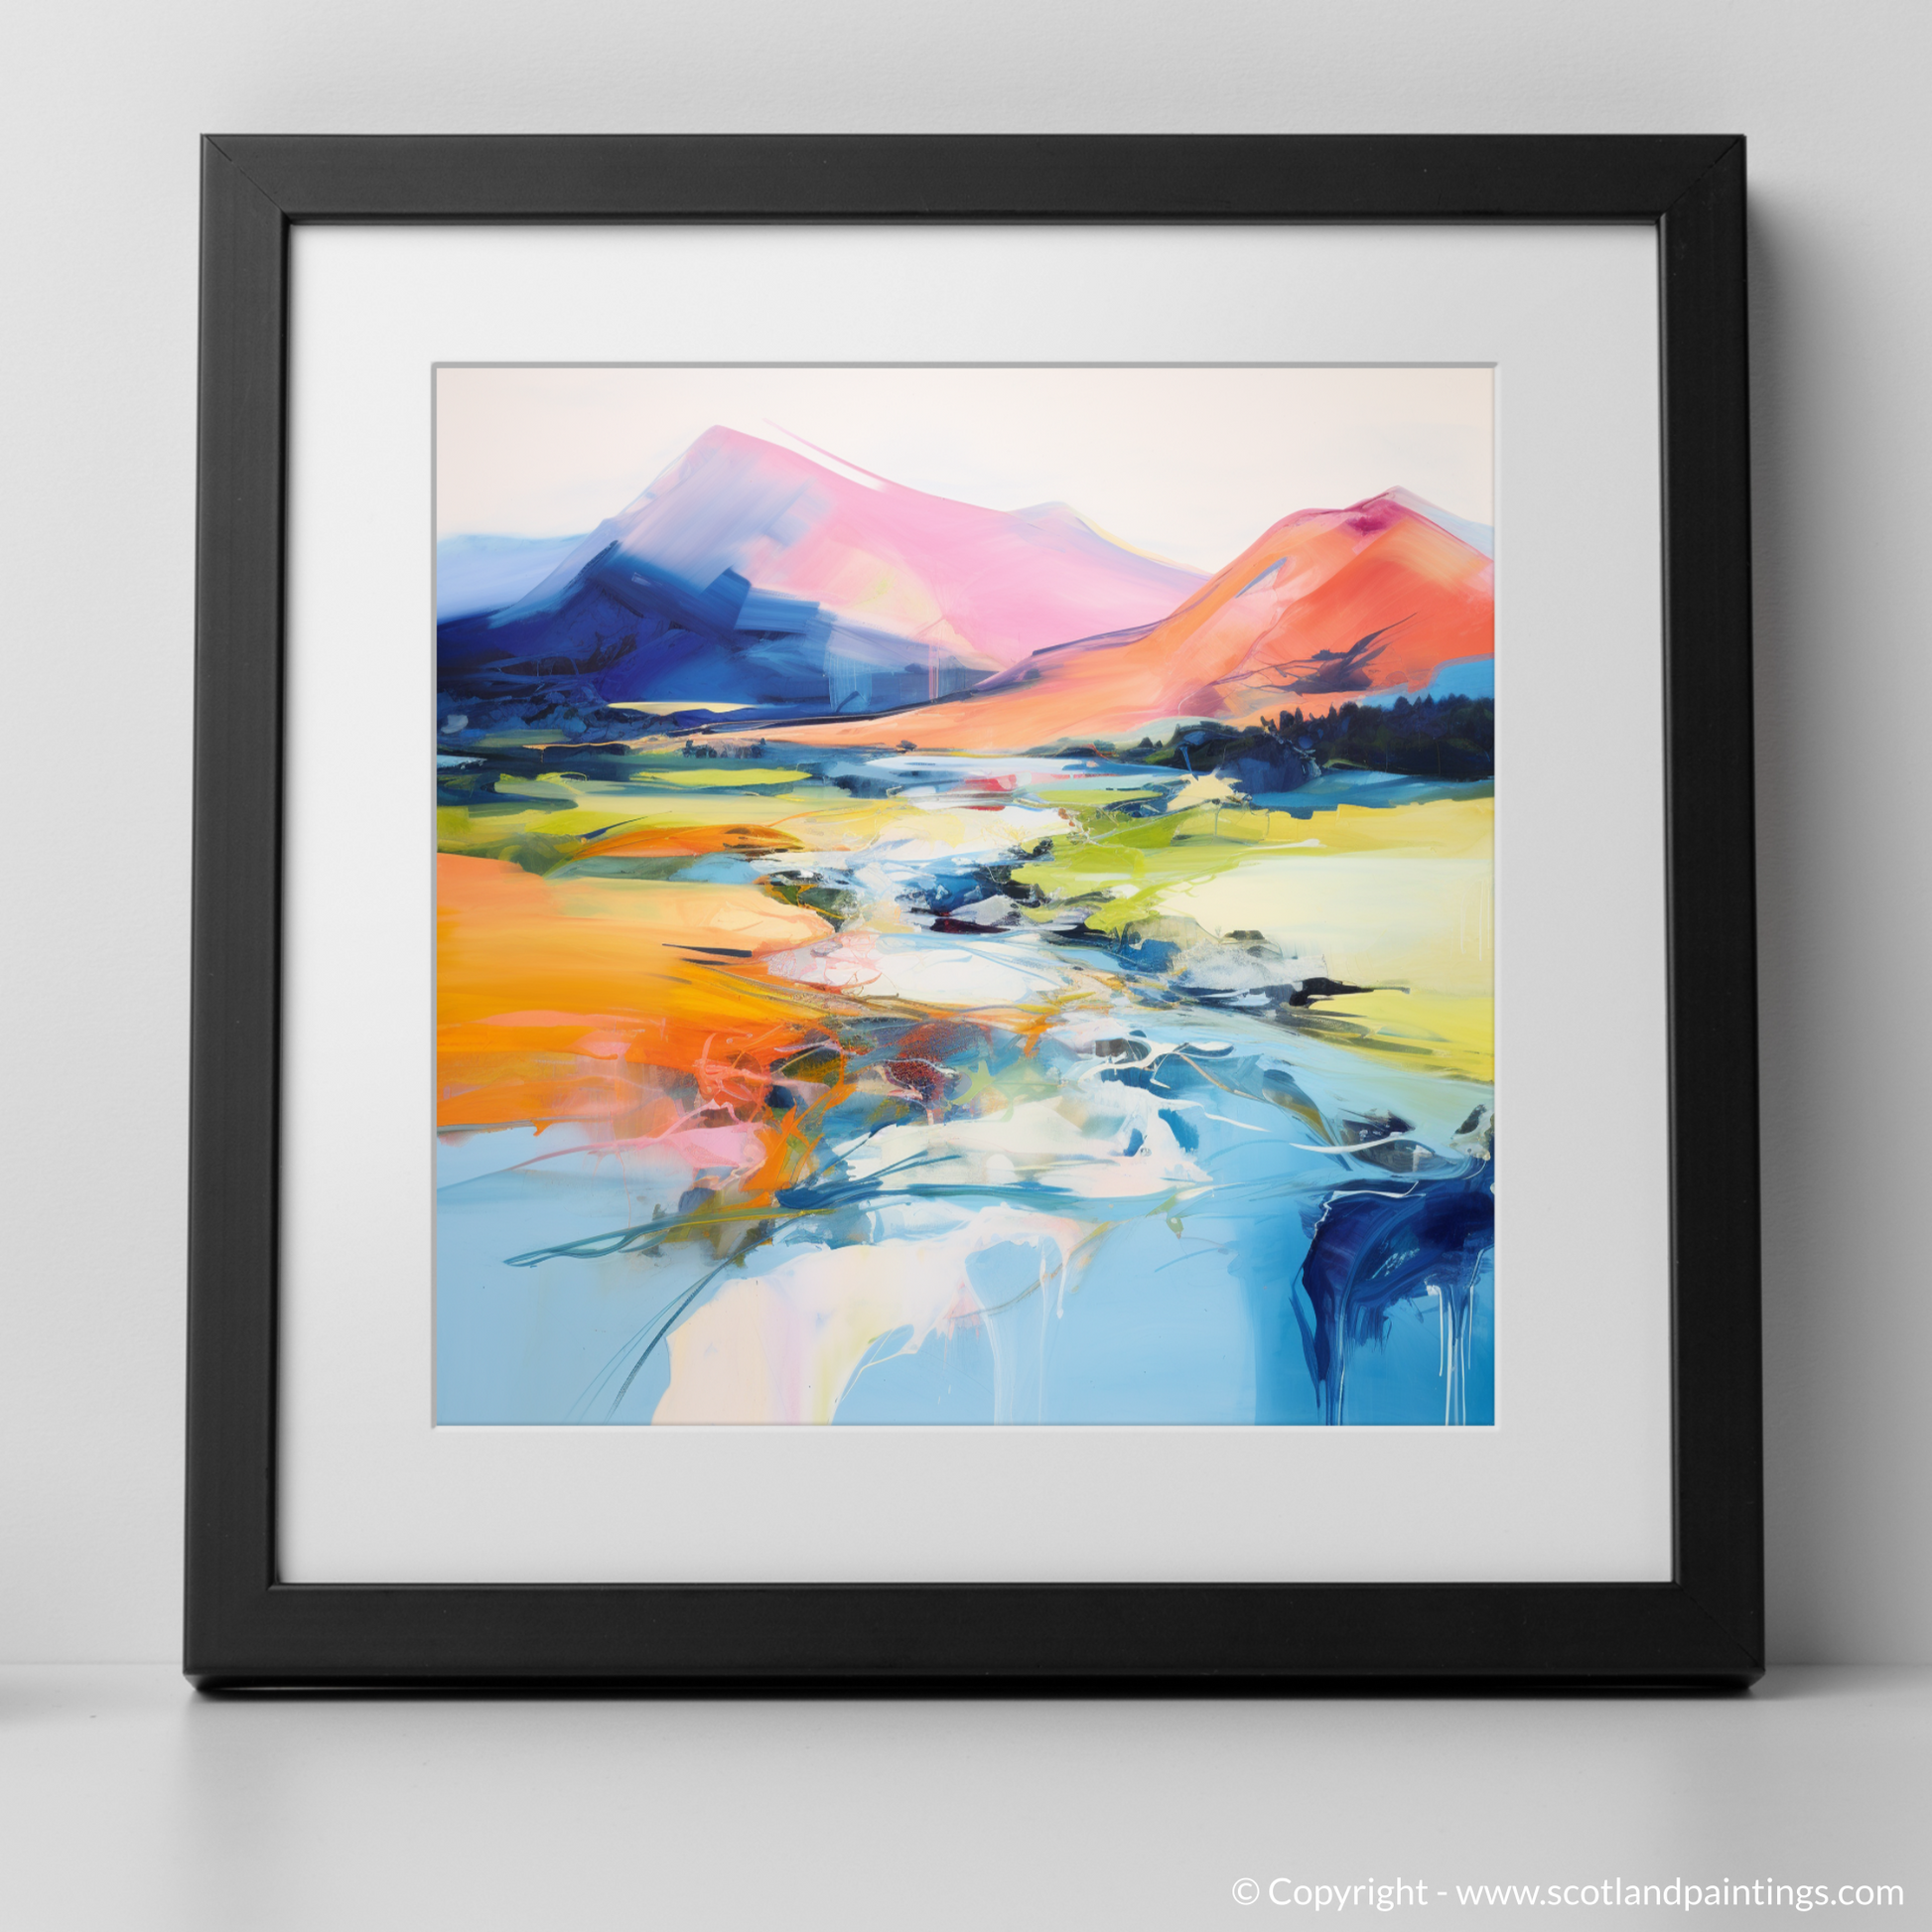 Art Print of River Spean, Highlands in summer with a black frame